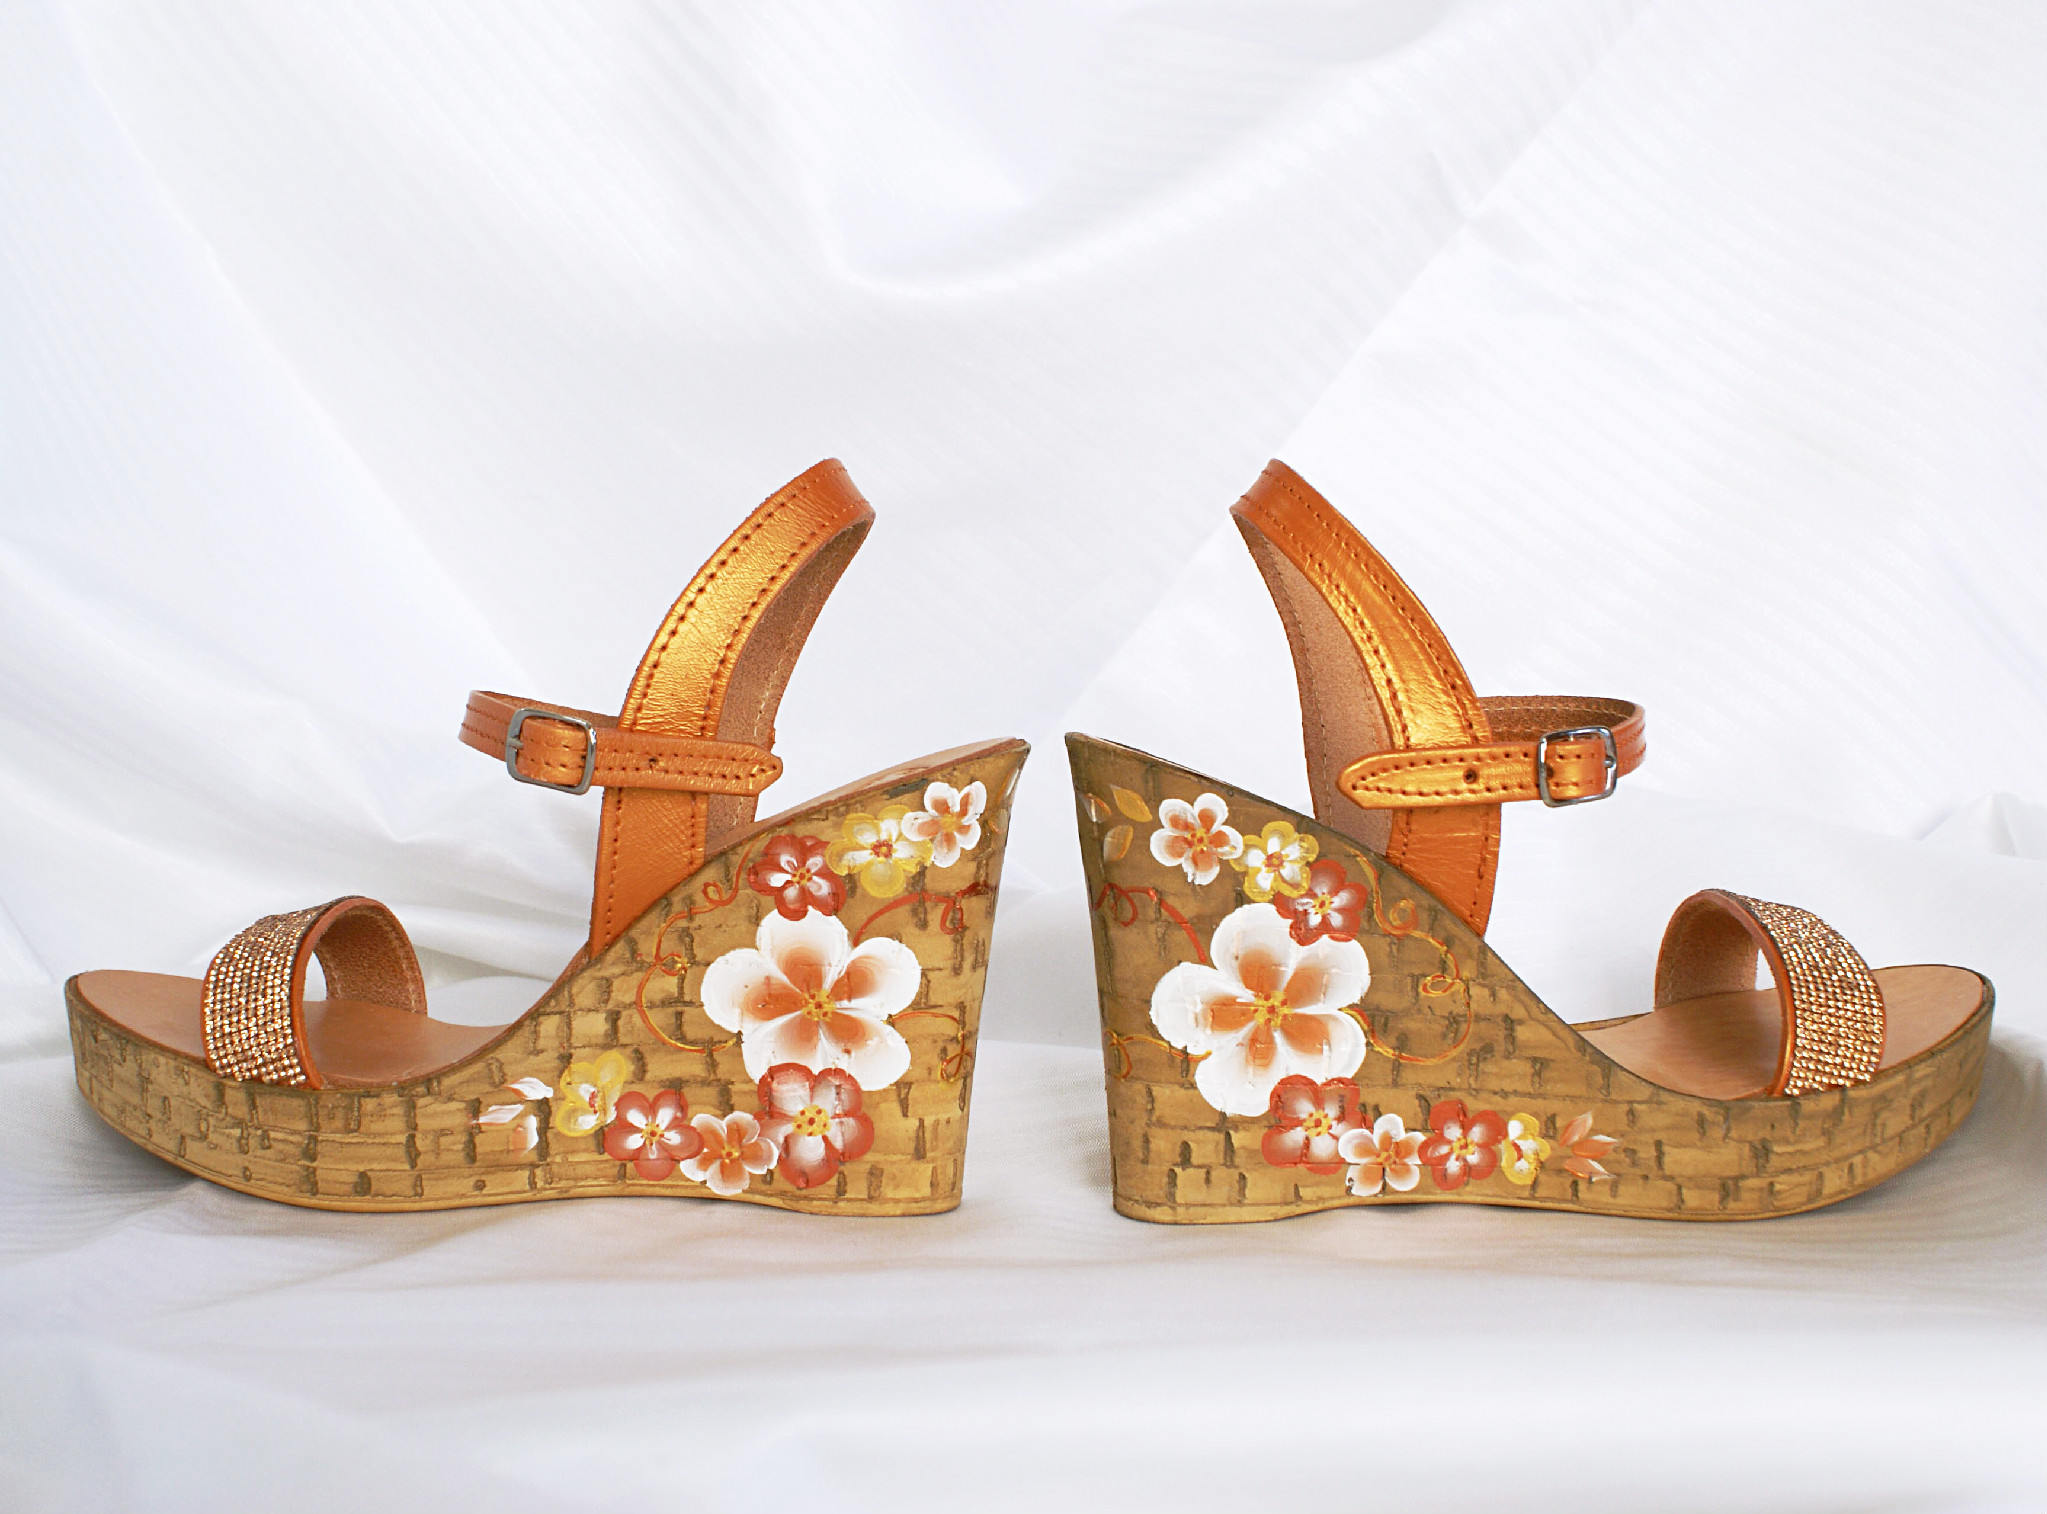 Buy > bronze shoes for wedding > in stock